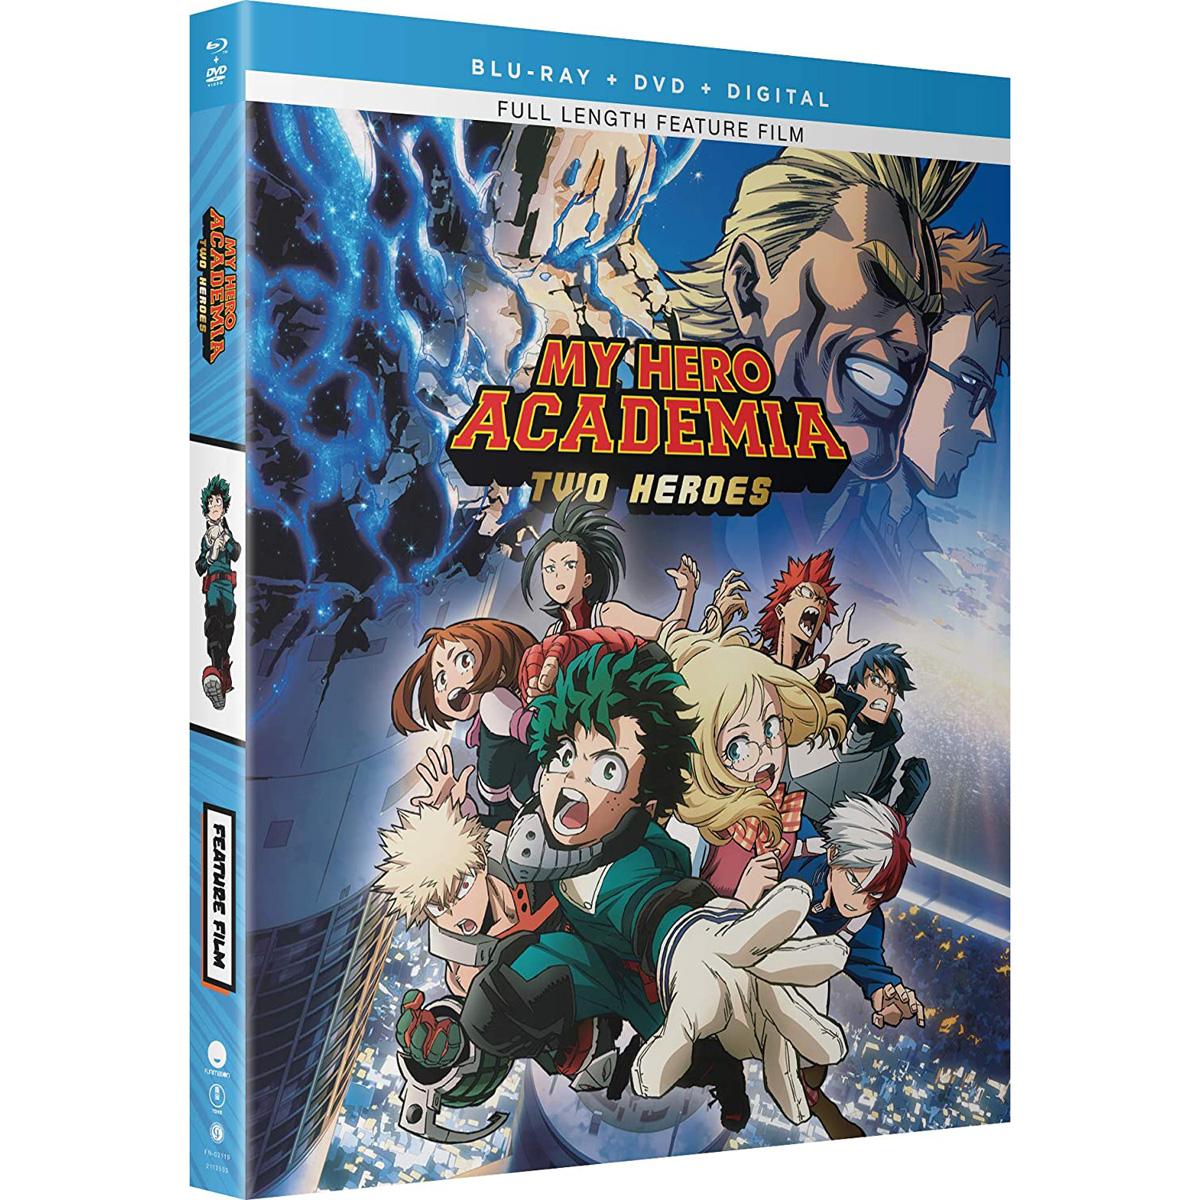 My Hero Academia Two Heroes Blu-ray + DVD for $7.99